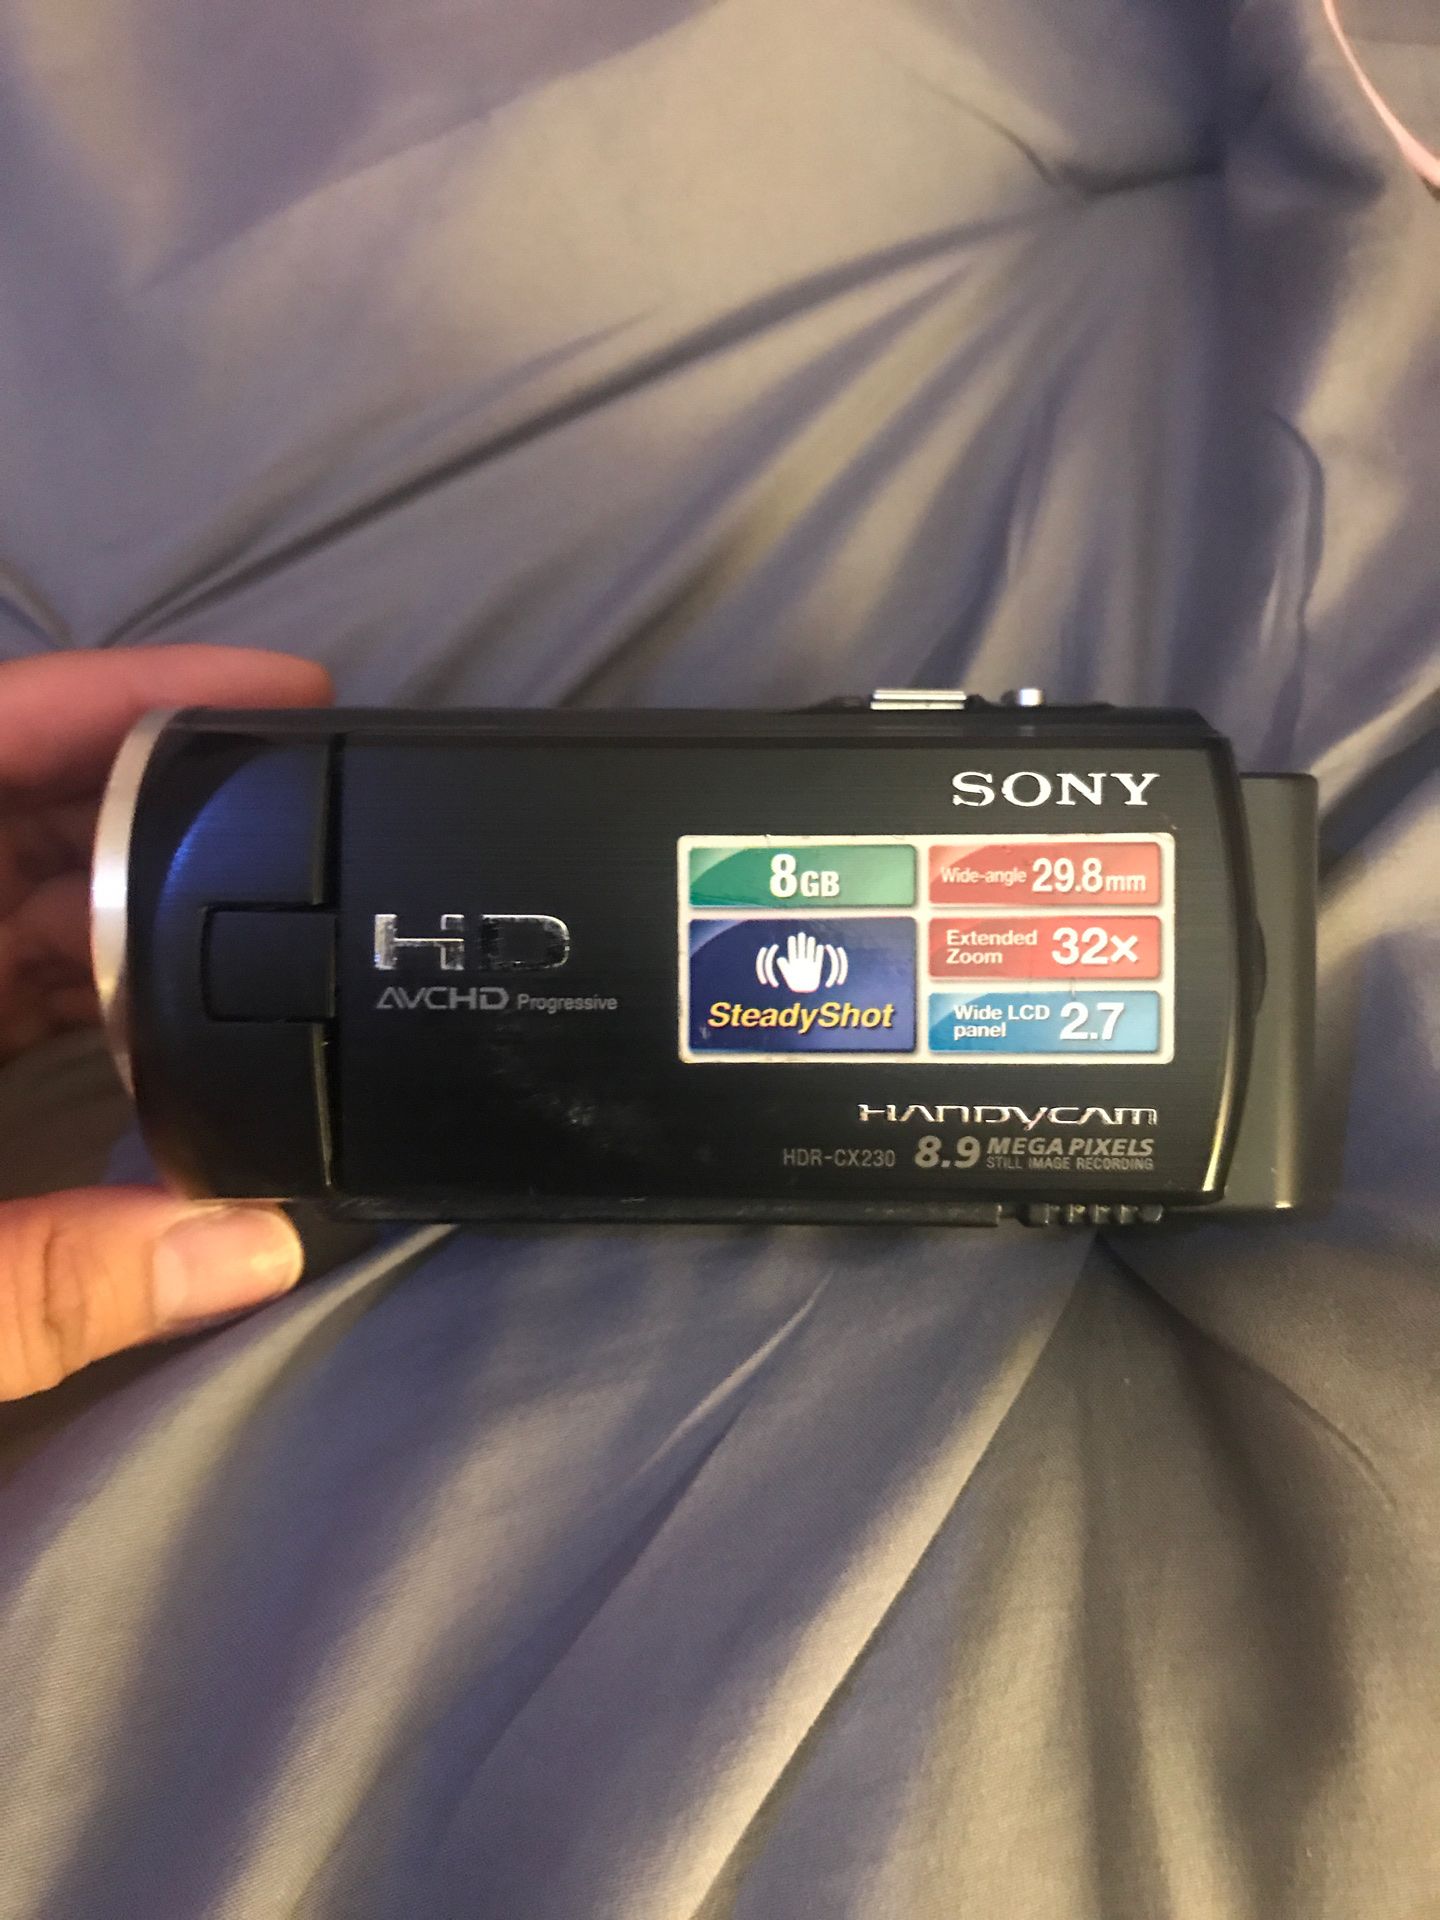 Sony handycam camcorder